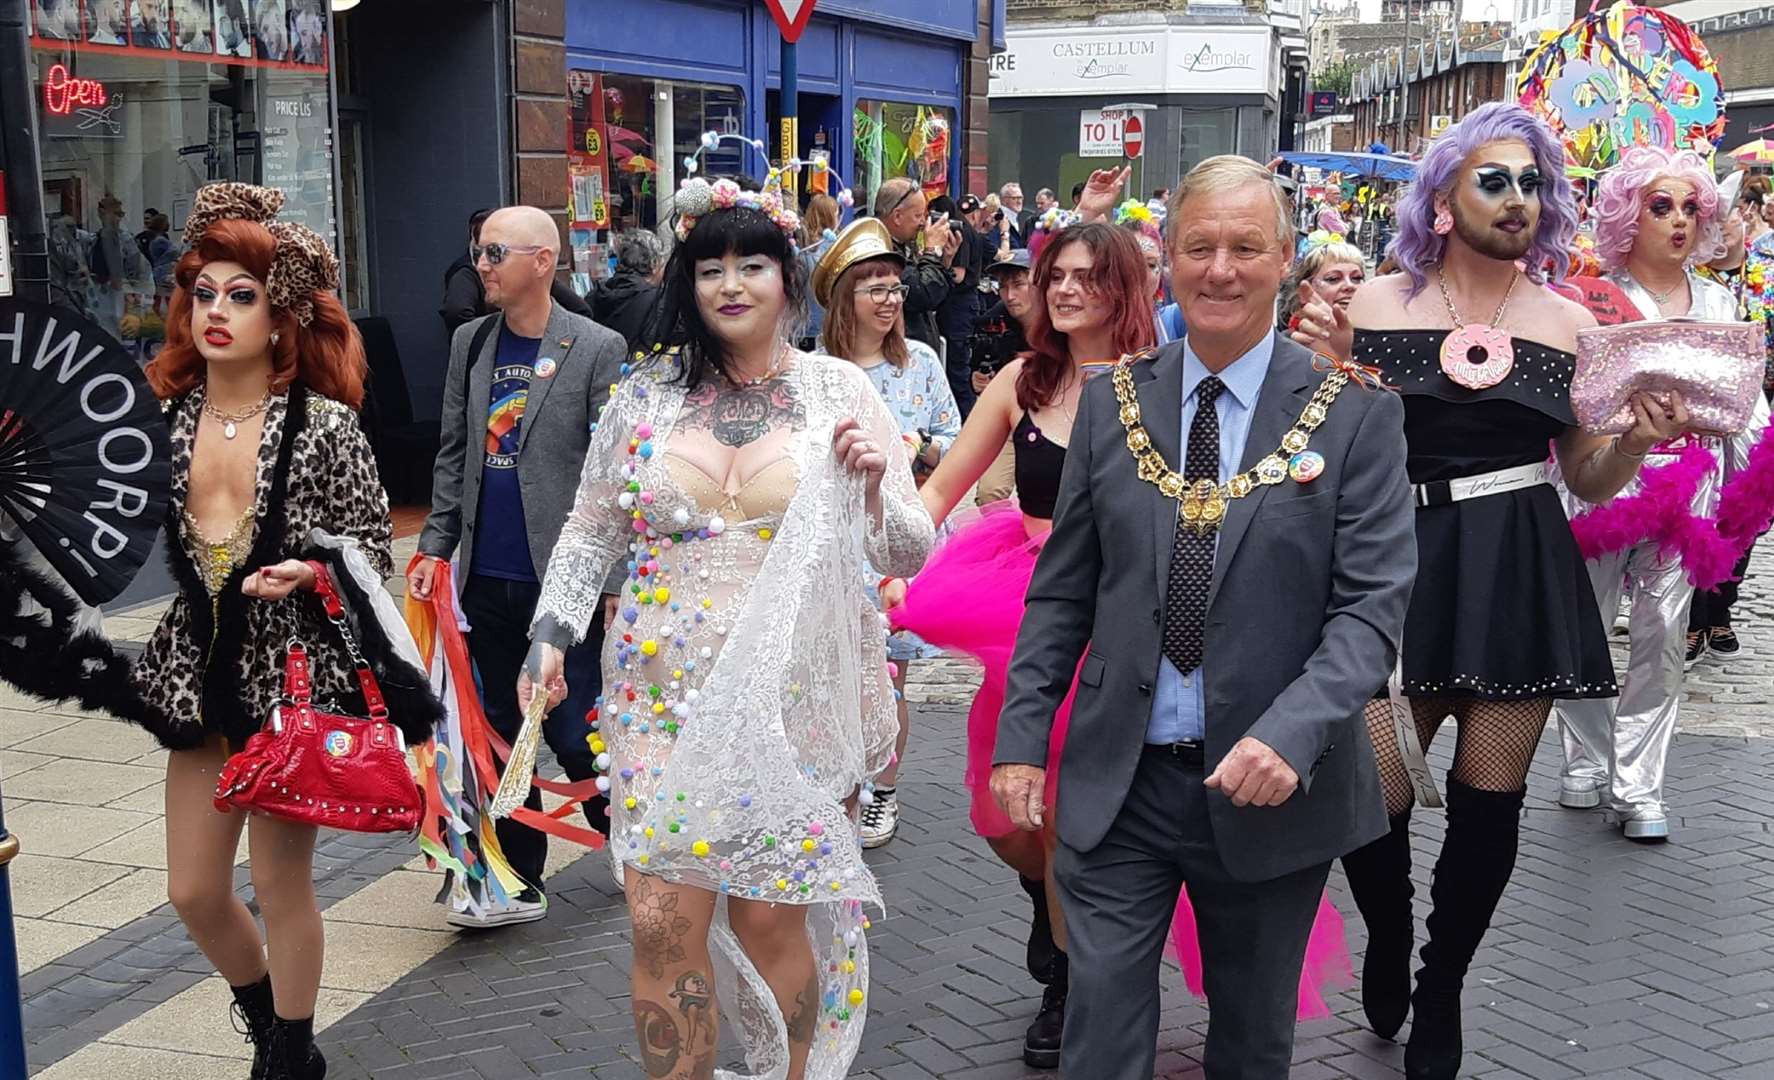 Dover mayor Gordon Cowan led the parade last year. Picture: Sam Lennon KMG